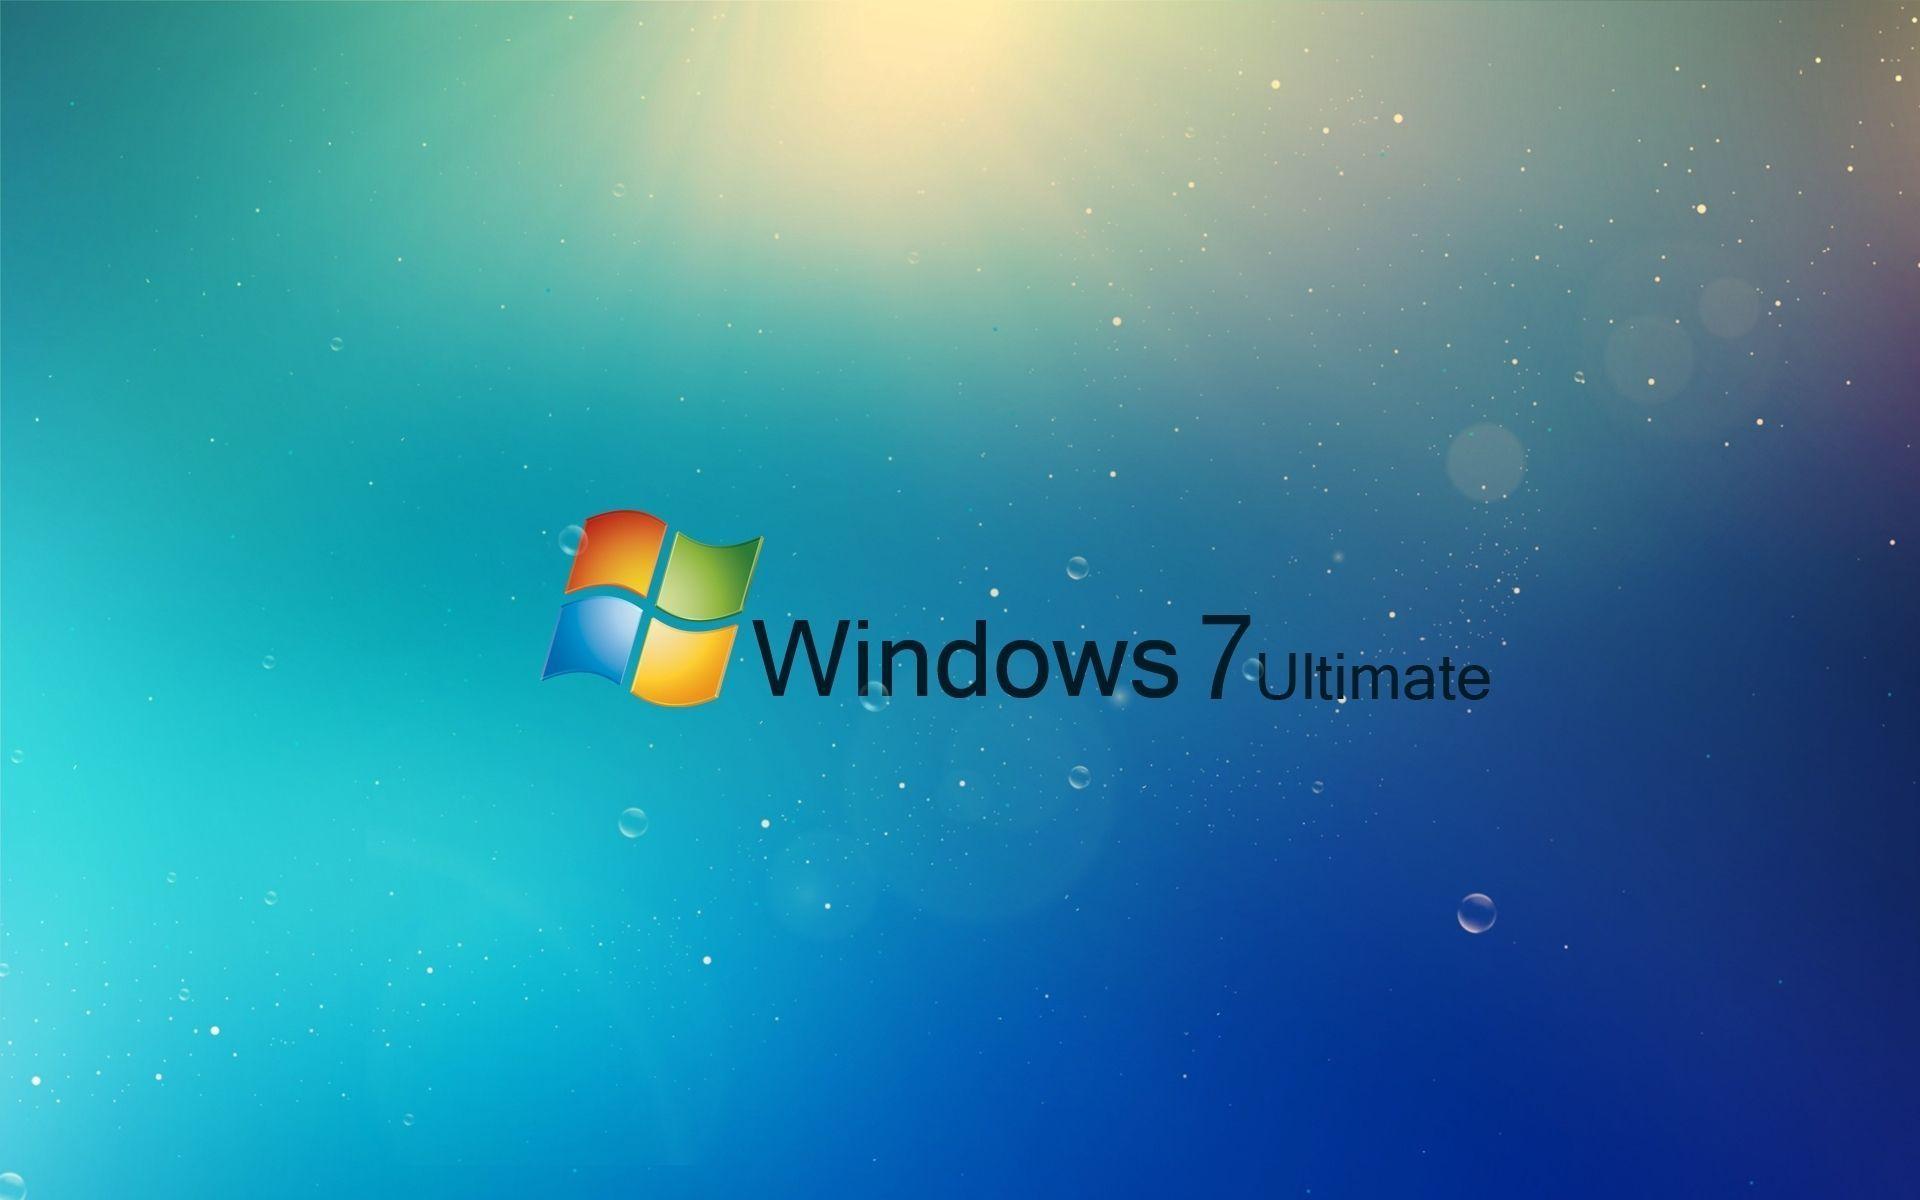 Windows 7 Ultimate Logo - pic new posts: Wallpaper HD Win 1920×1200 Windows 7 New Wallpaper